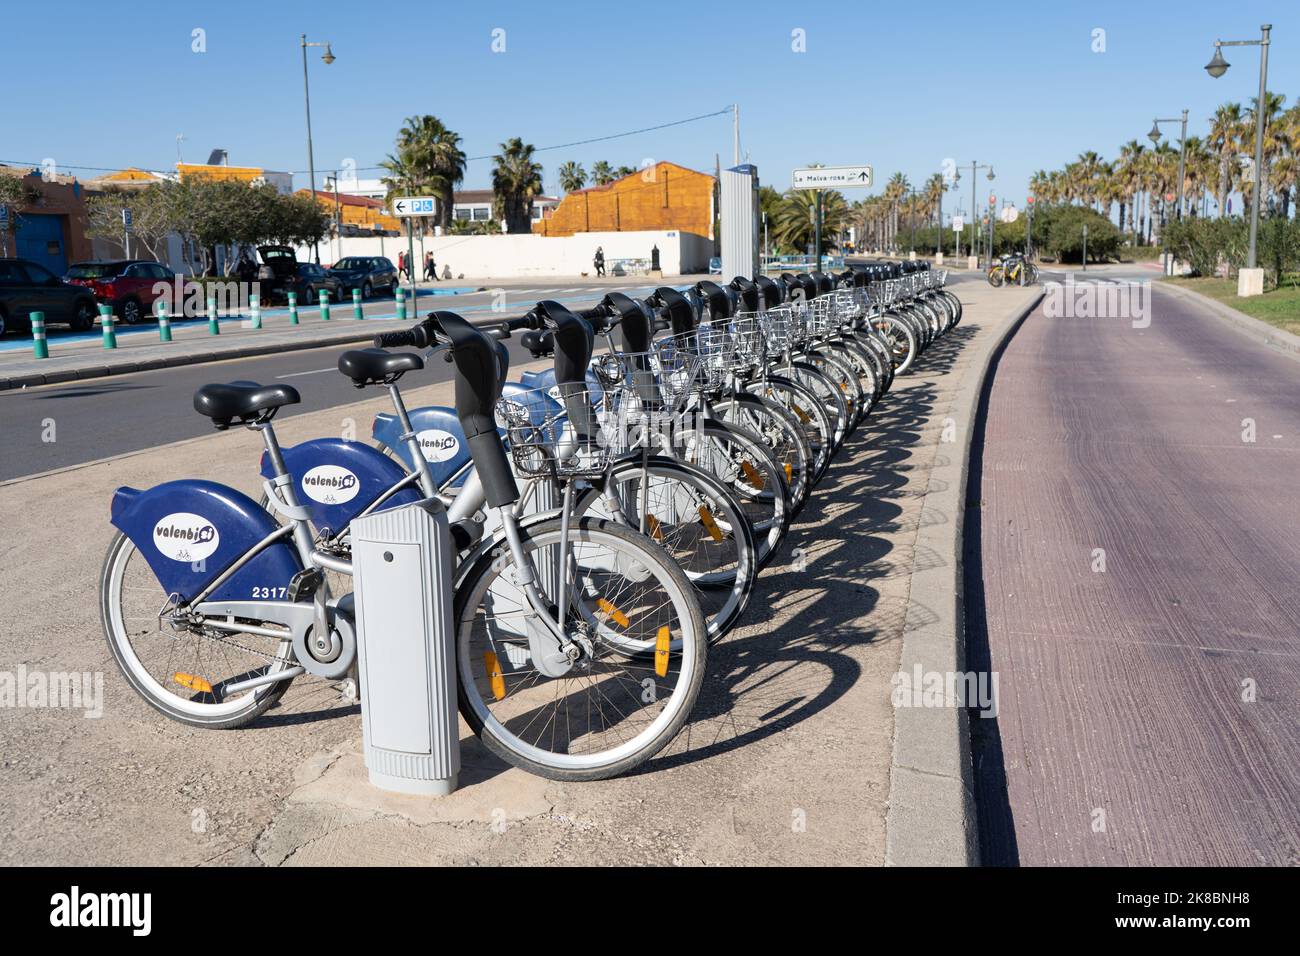 Valenbisi noleggio bici Valencia, Spagna Foto stock - Alamy